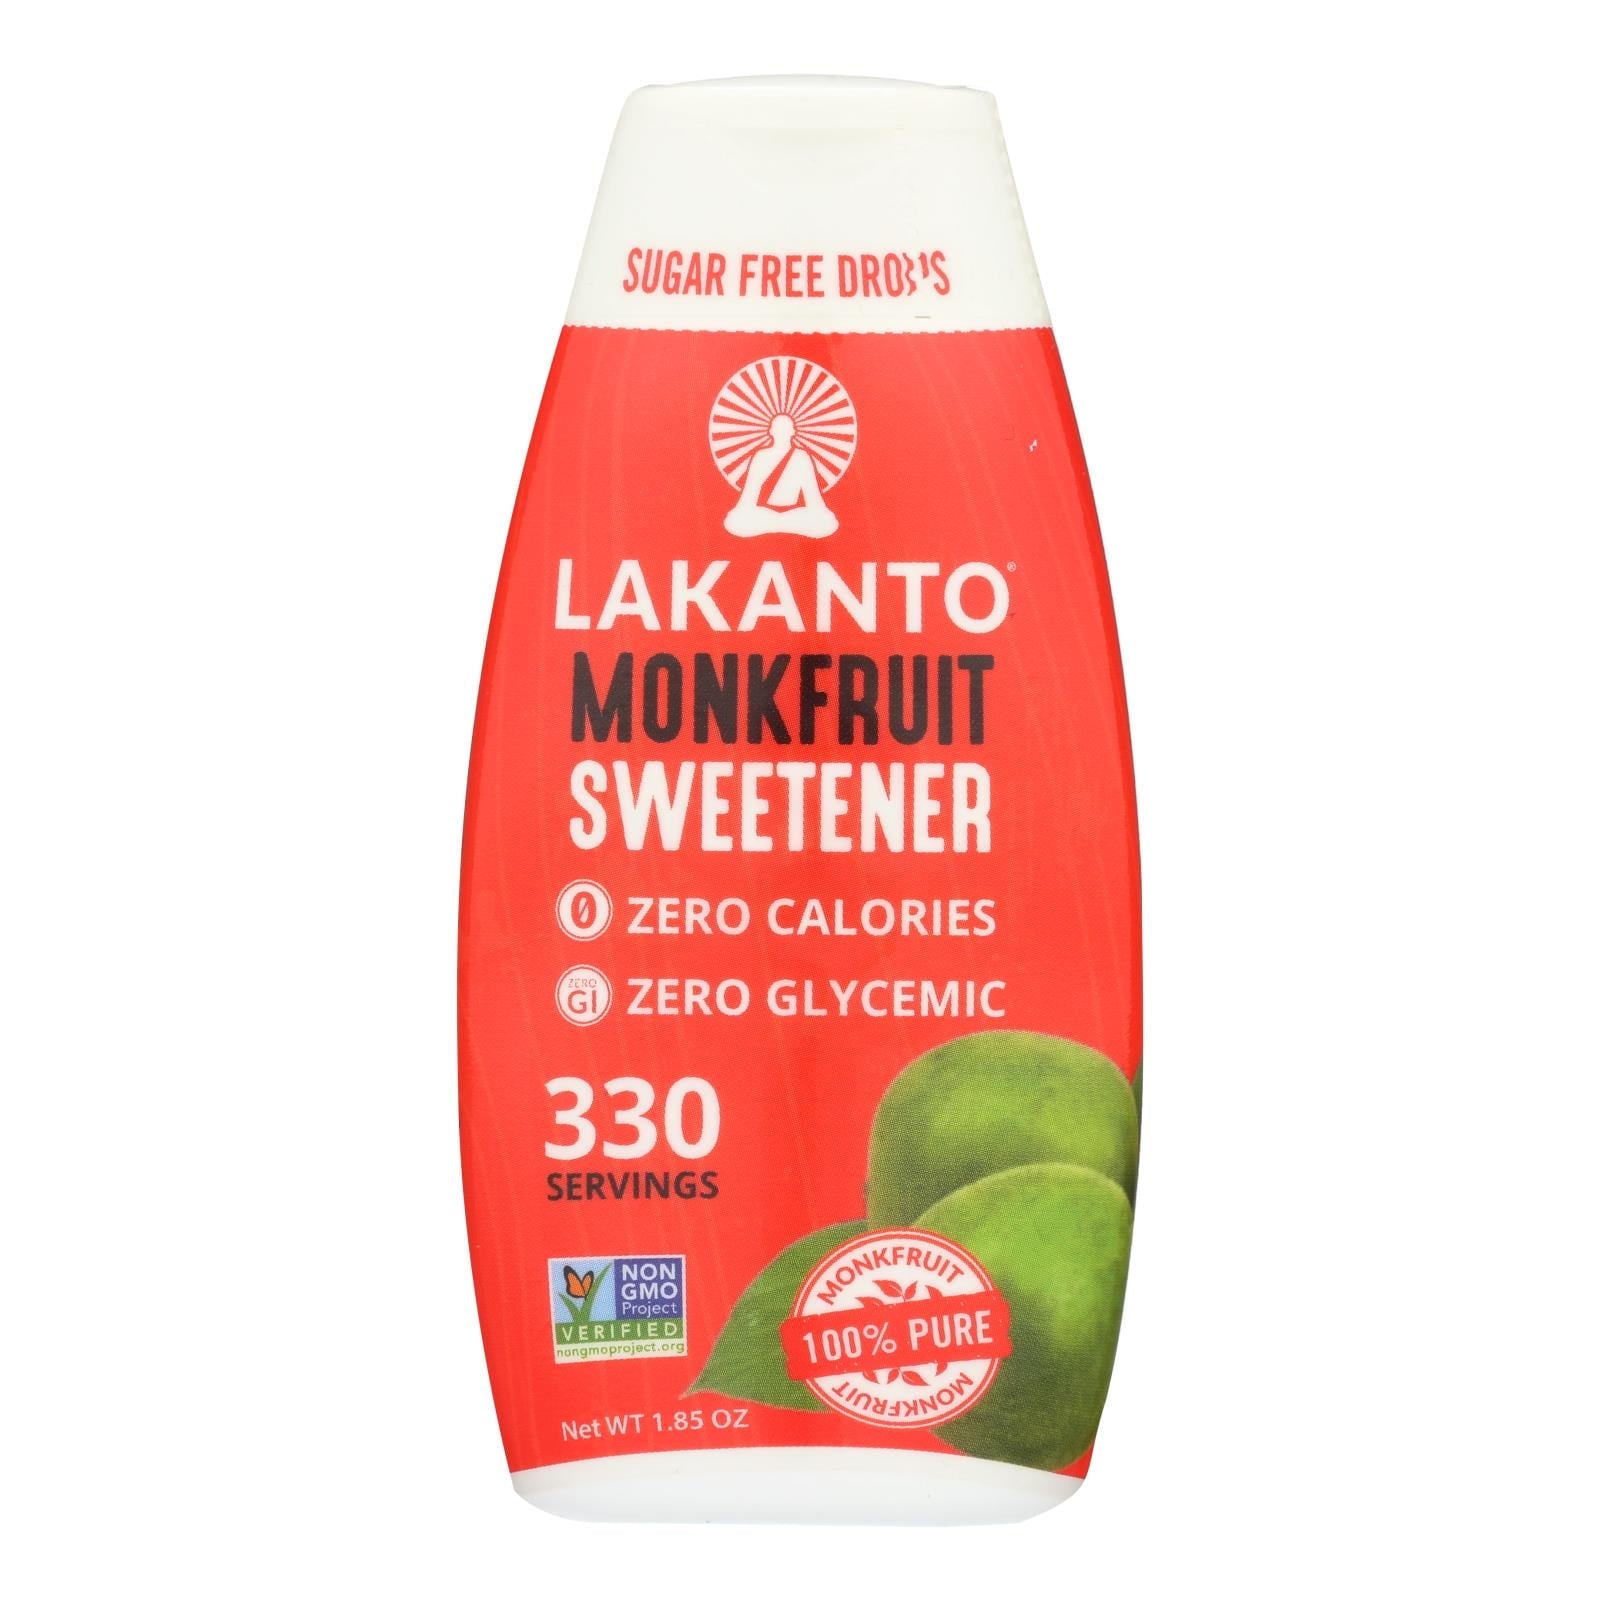 Lakanto Original Liquid Monkfruit Sweetener 1.85 oz Bag